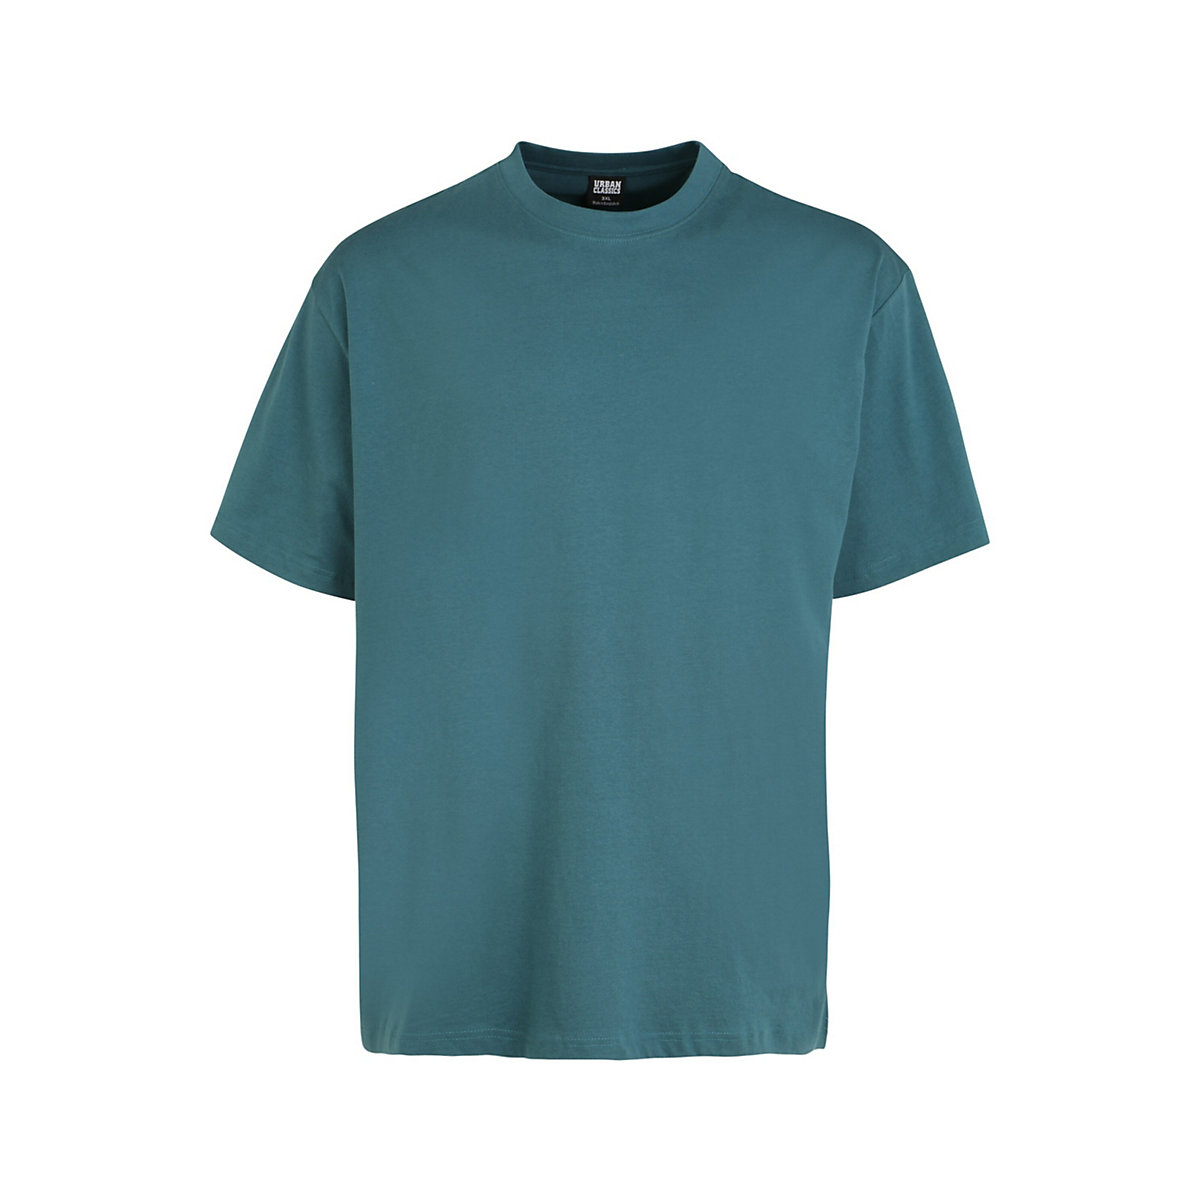 Urban Classics shirt pastellblau